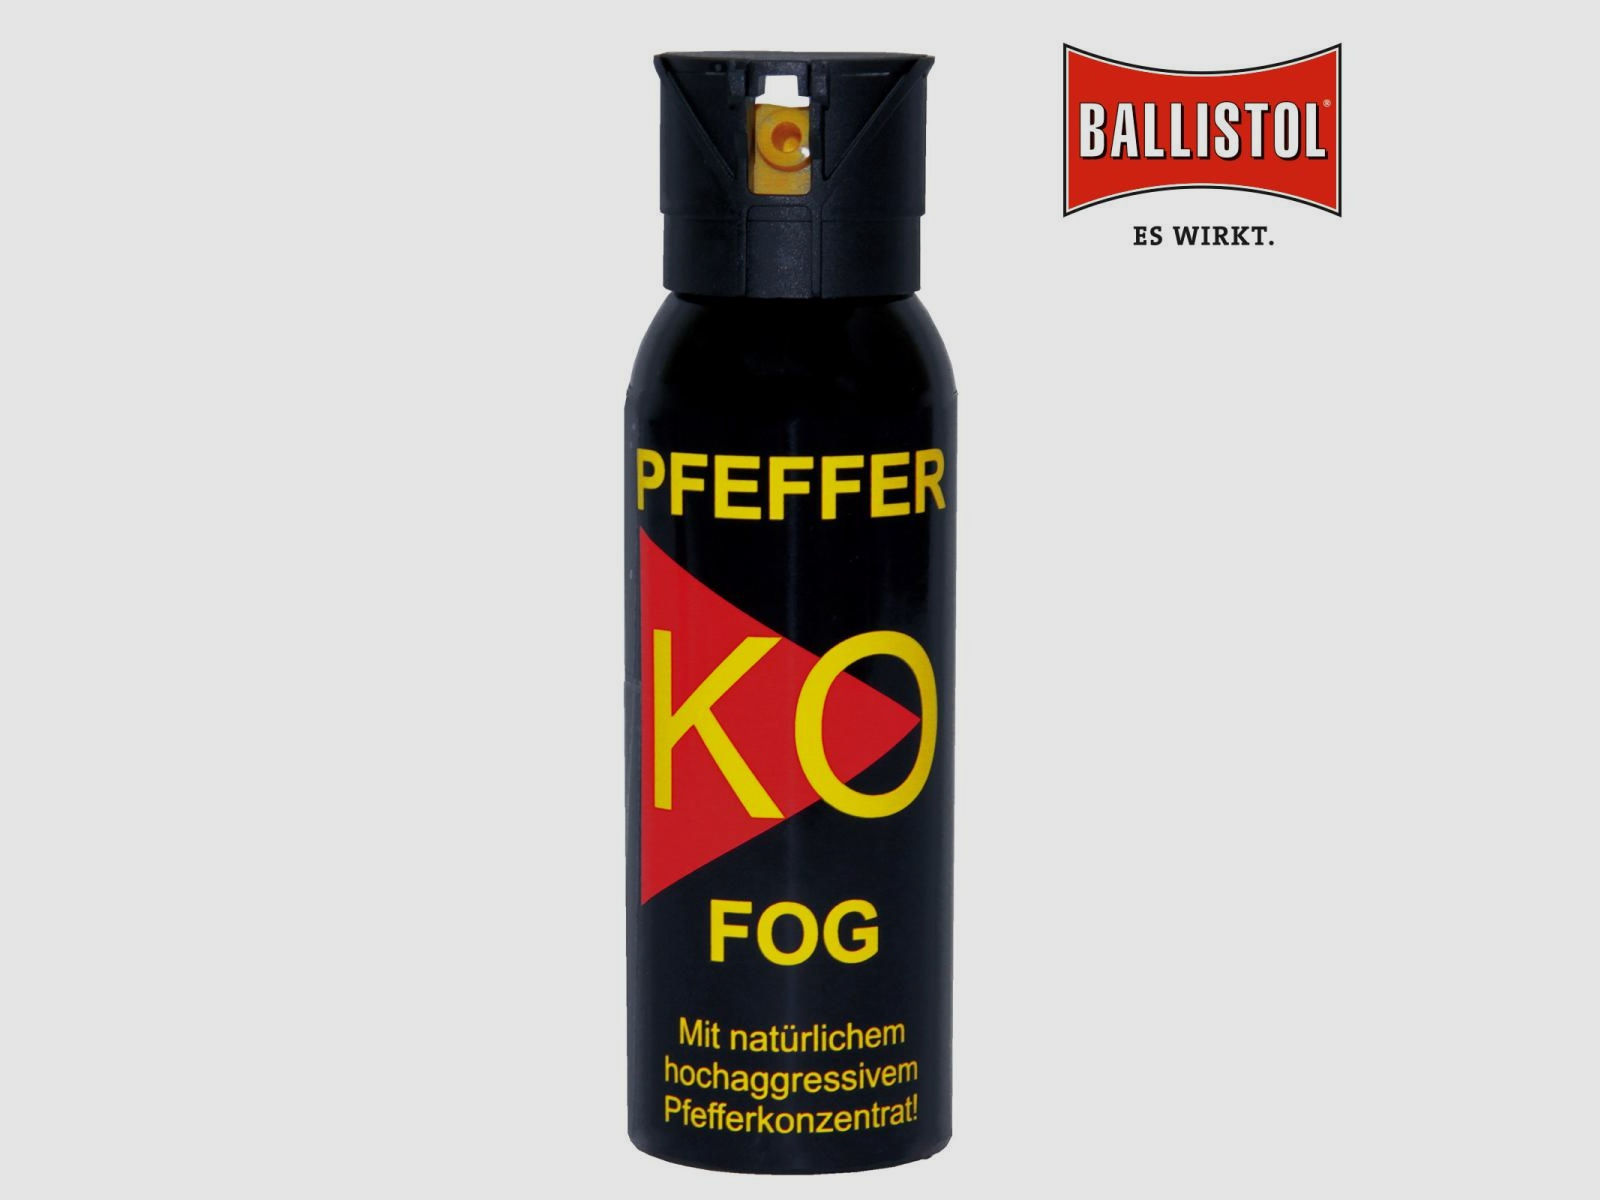 Ballistol Pfeffer-KO-Spray FOG 100ml